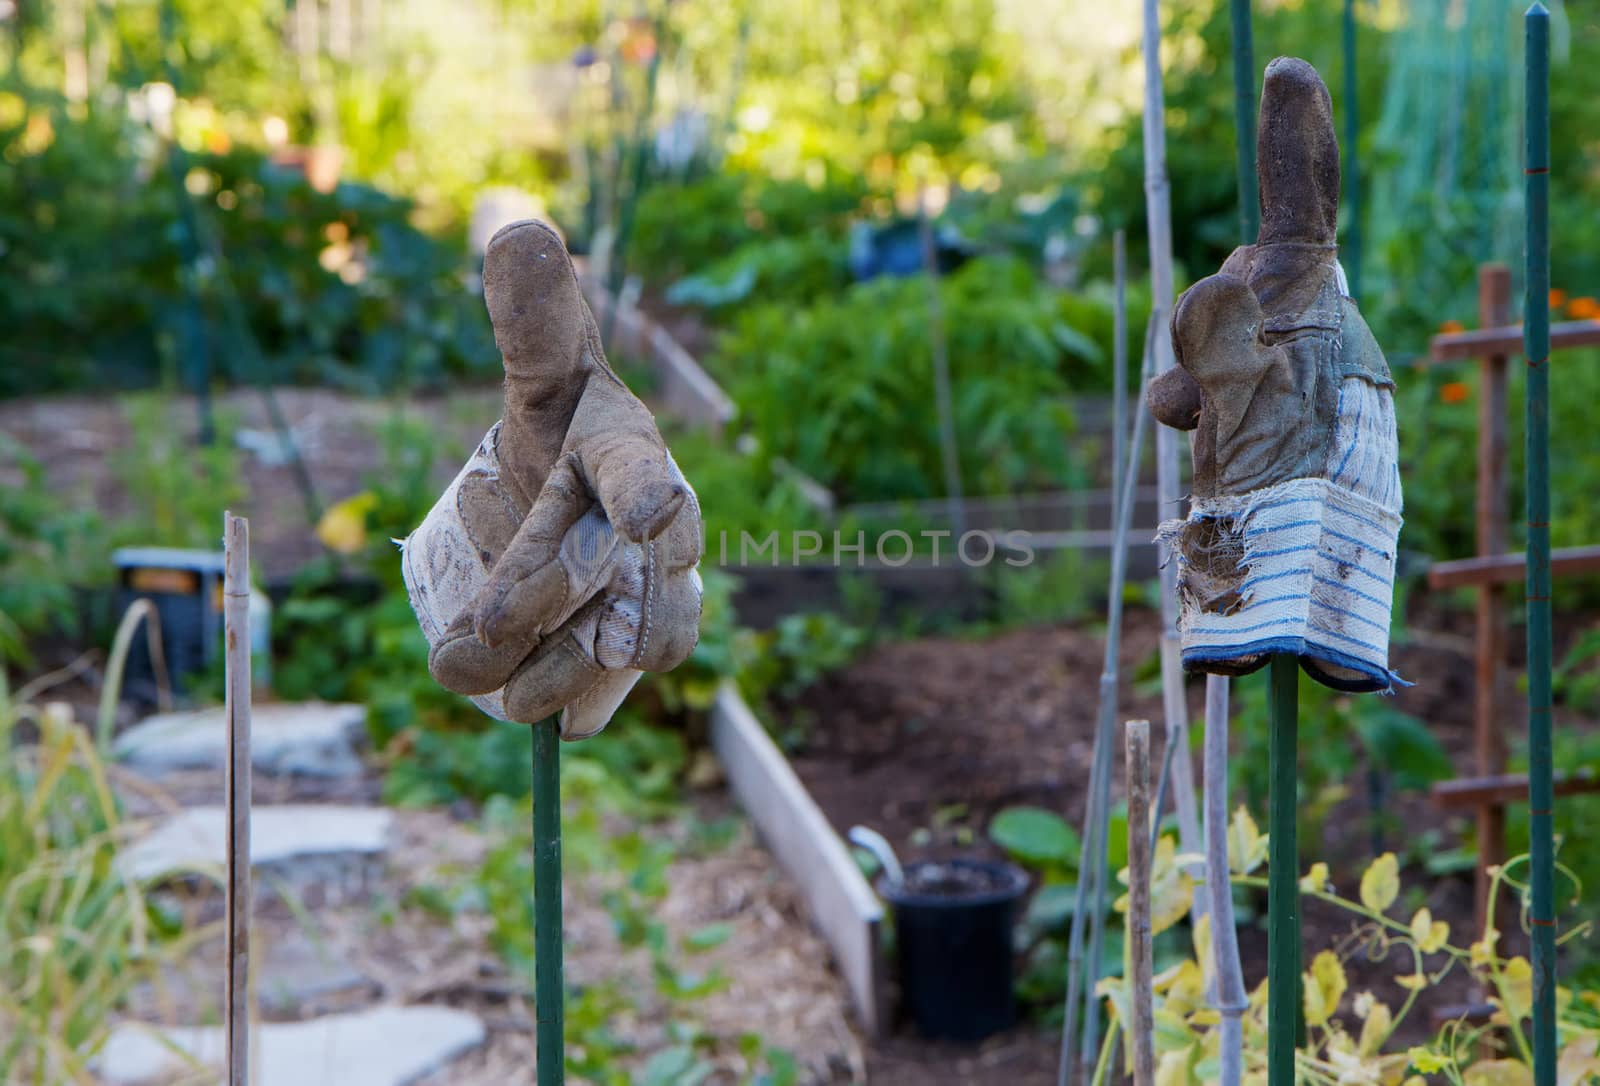 Pair of old worn gardening gloves seemingly giving pointers in an urban garden